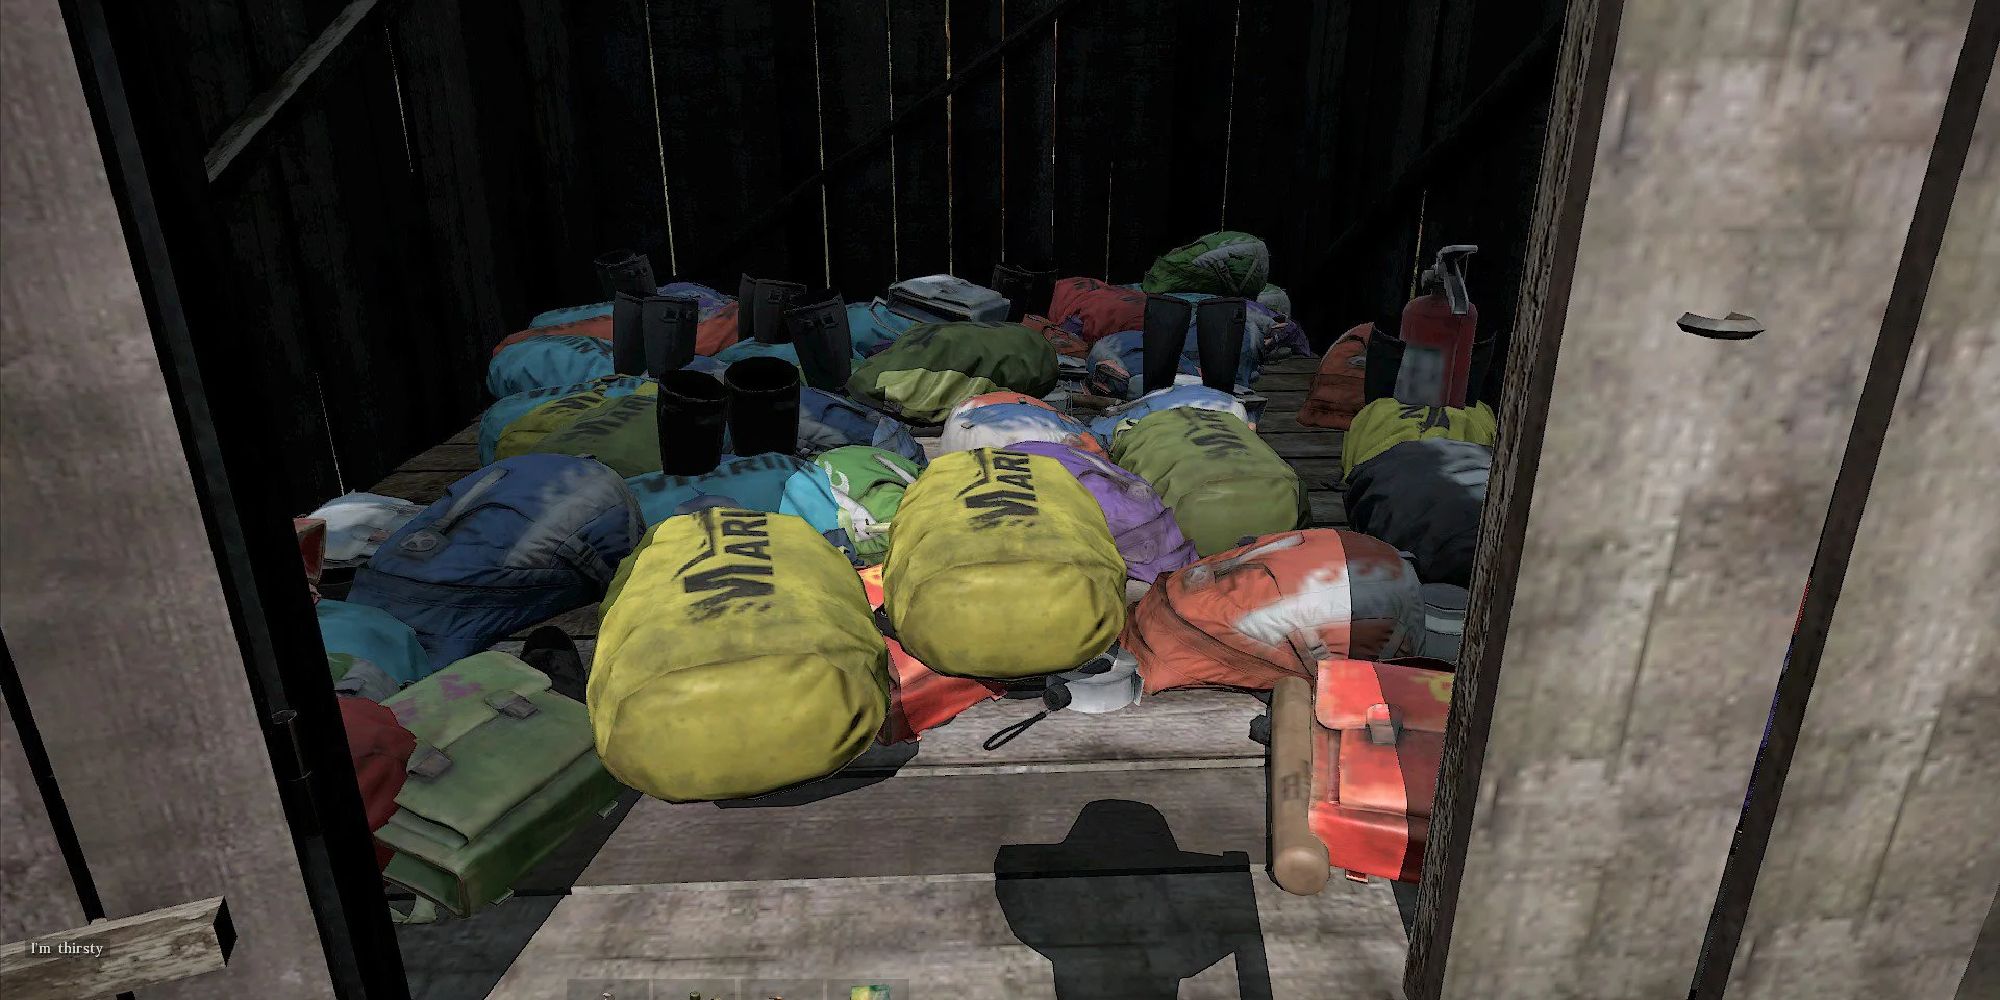 Un hangar rempli de sacs à dos Drybag colorés